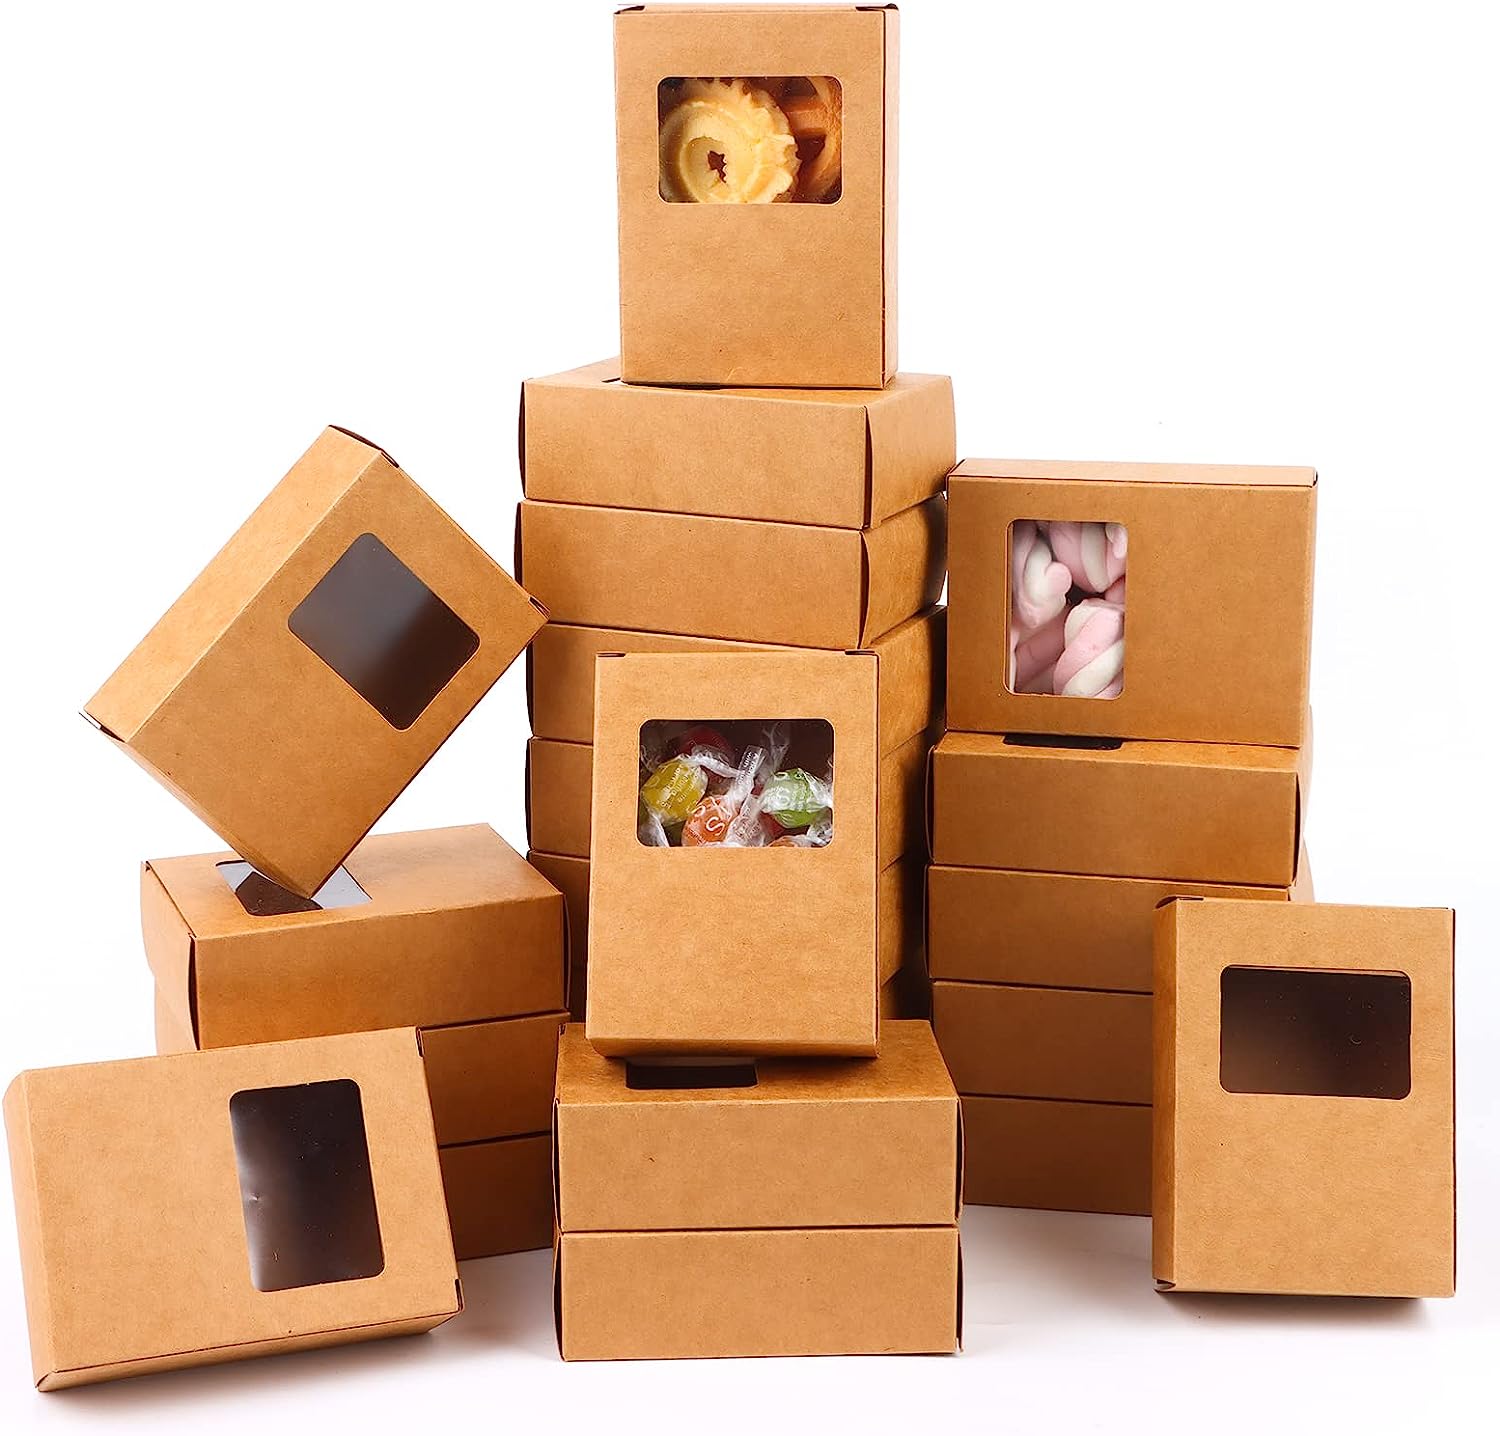  Zhanmai 100 Pcs Small Soap Packaging Boxes 3.3 X 2.36 X 1.2  Rectangle Mini Boxes